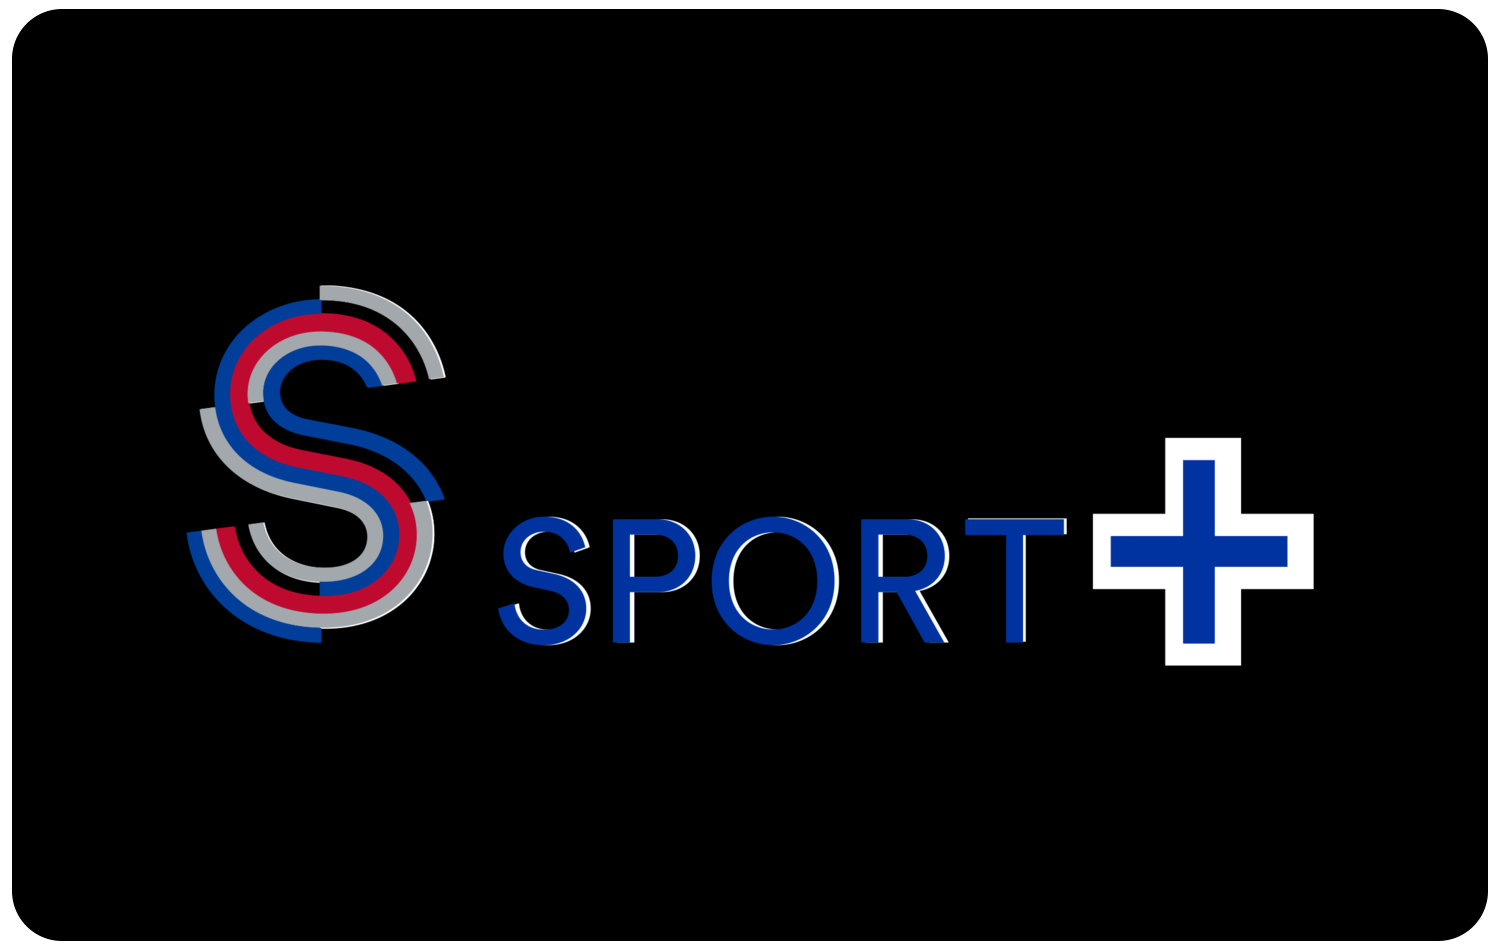 Sports plus canli izle. S Sport Plus. Sport Plus izle. Плюс логотип. S Sports Plus Canli.